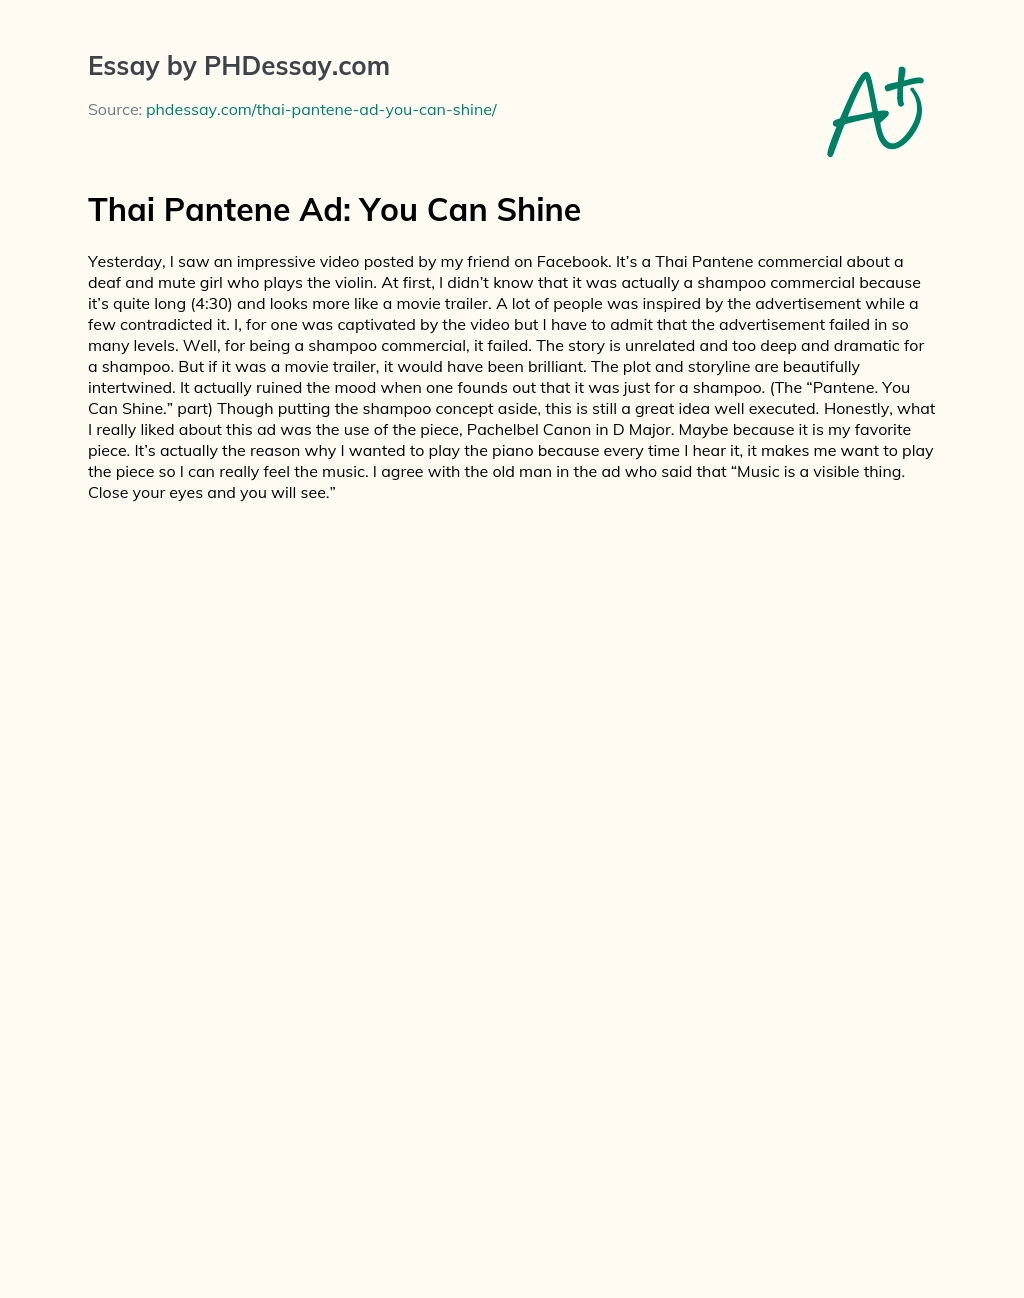 Thai Pantene Ad: You Can Shine essay